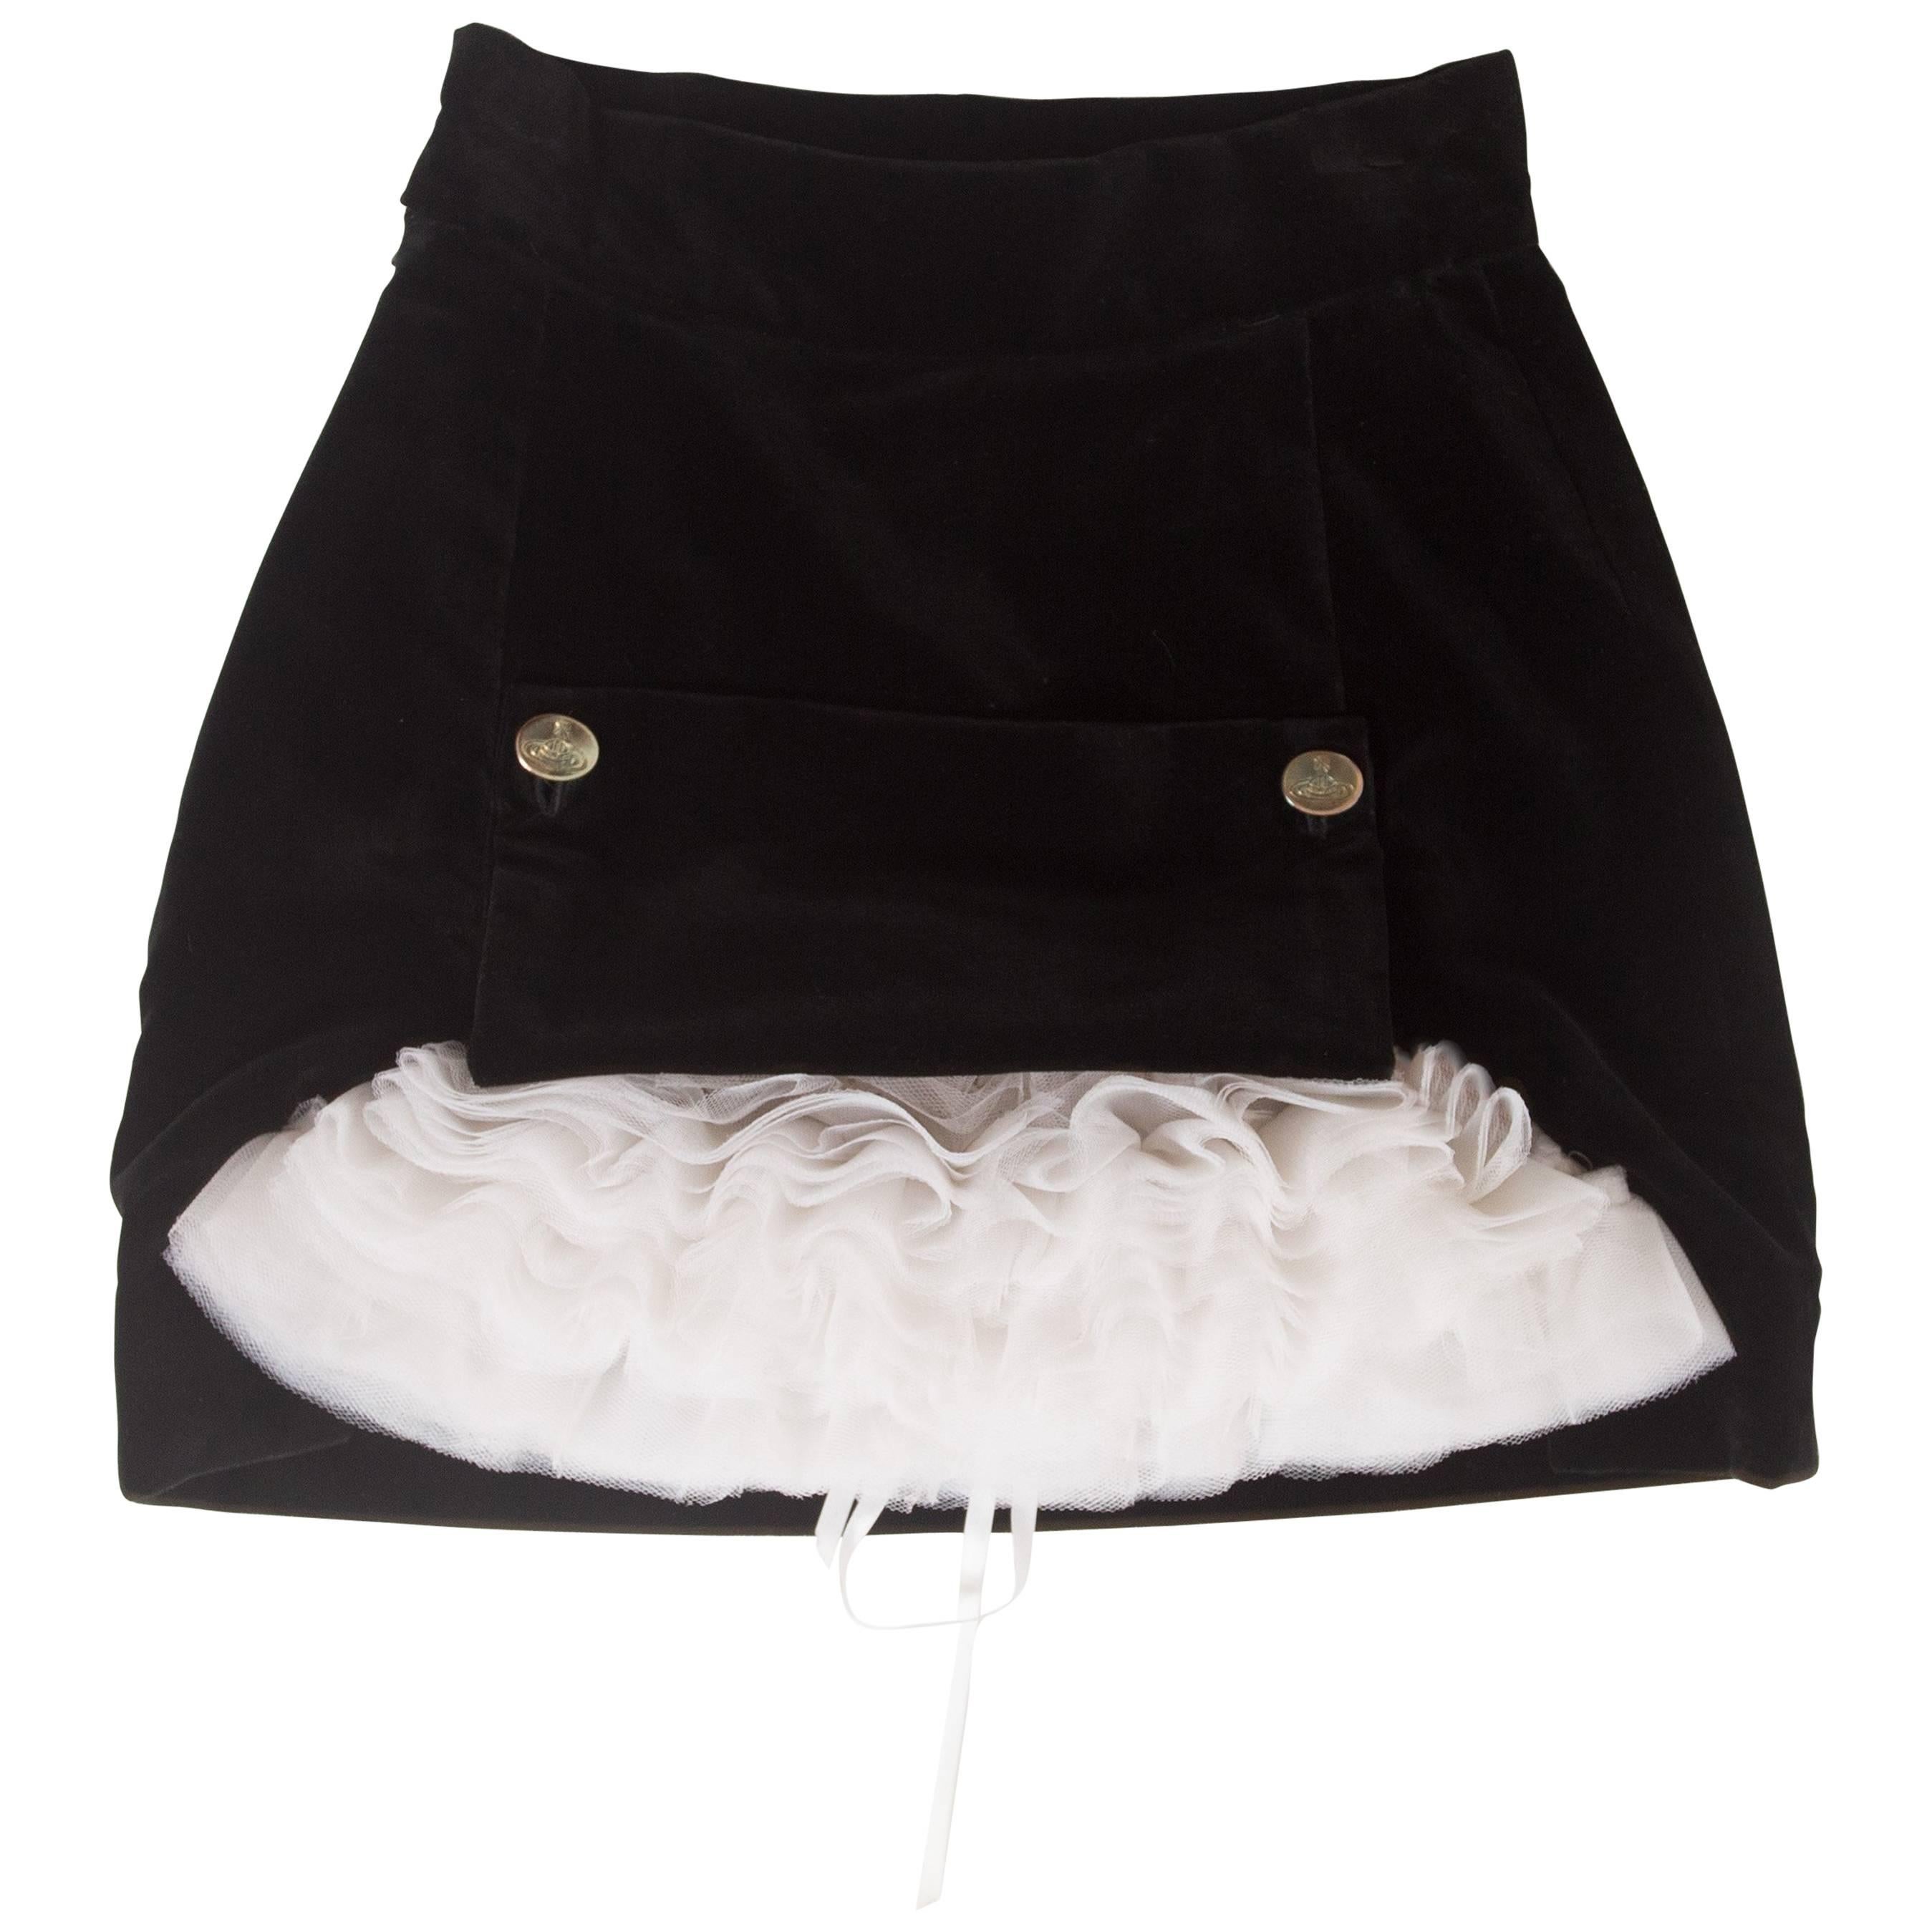 Vivienne Westwood black velvet mini skirt with crinoline, circa 1991